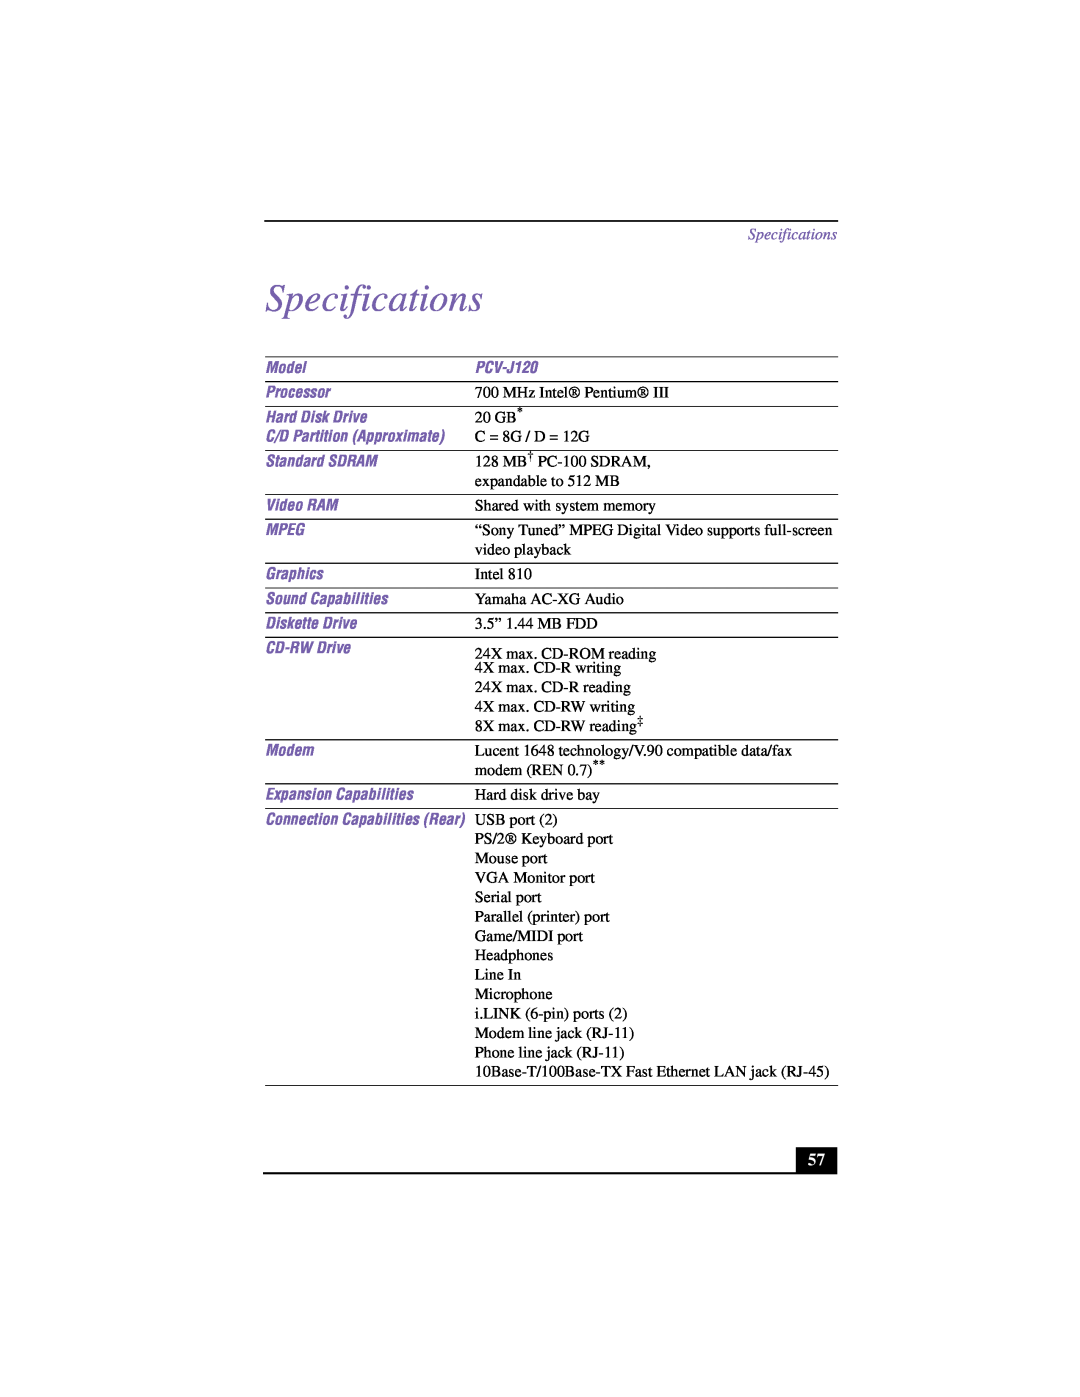 Sony VAIO manual Specifications 